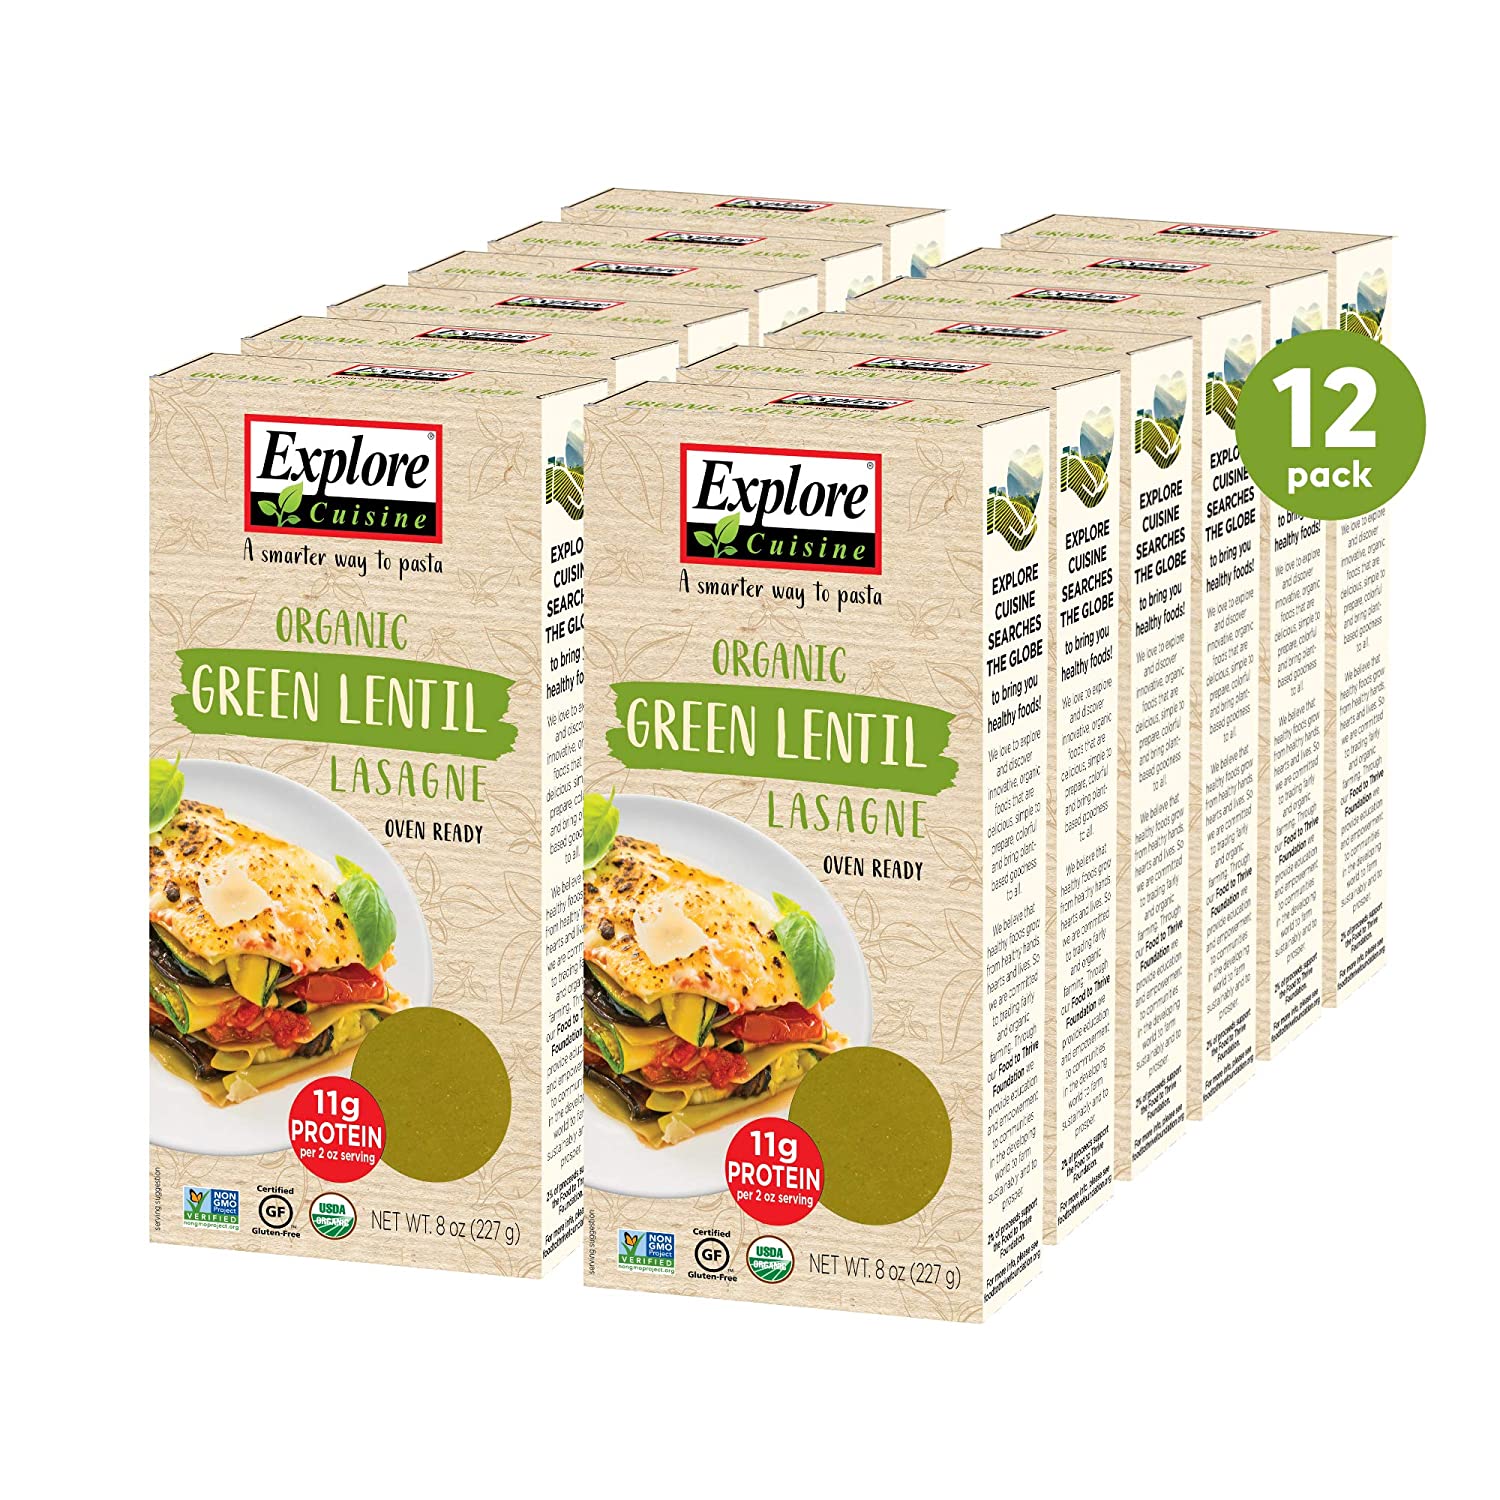 Explore Cuisine Organic Green Lentil Lasagne (12 Pack) - 8 oz